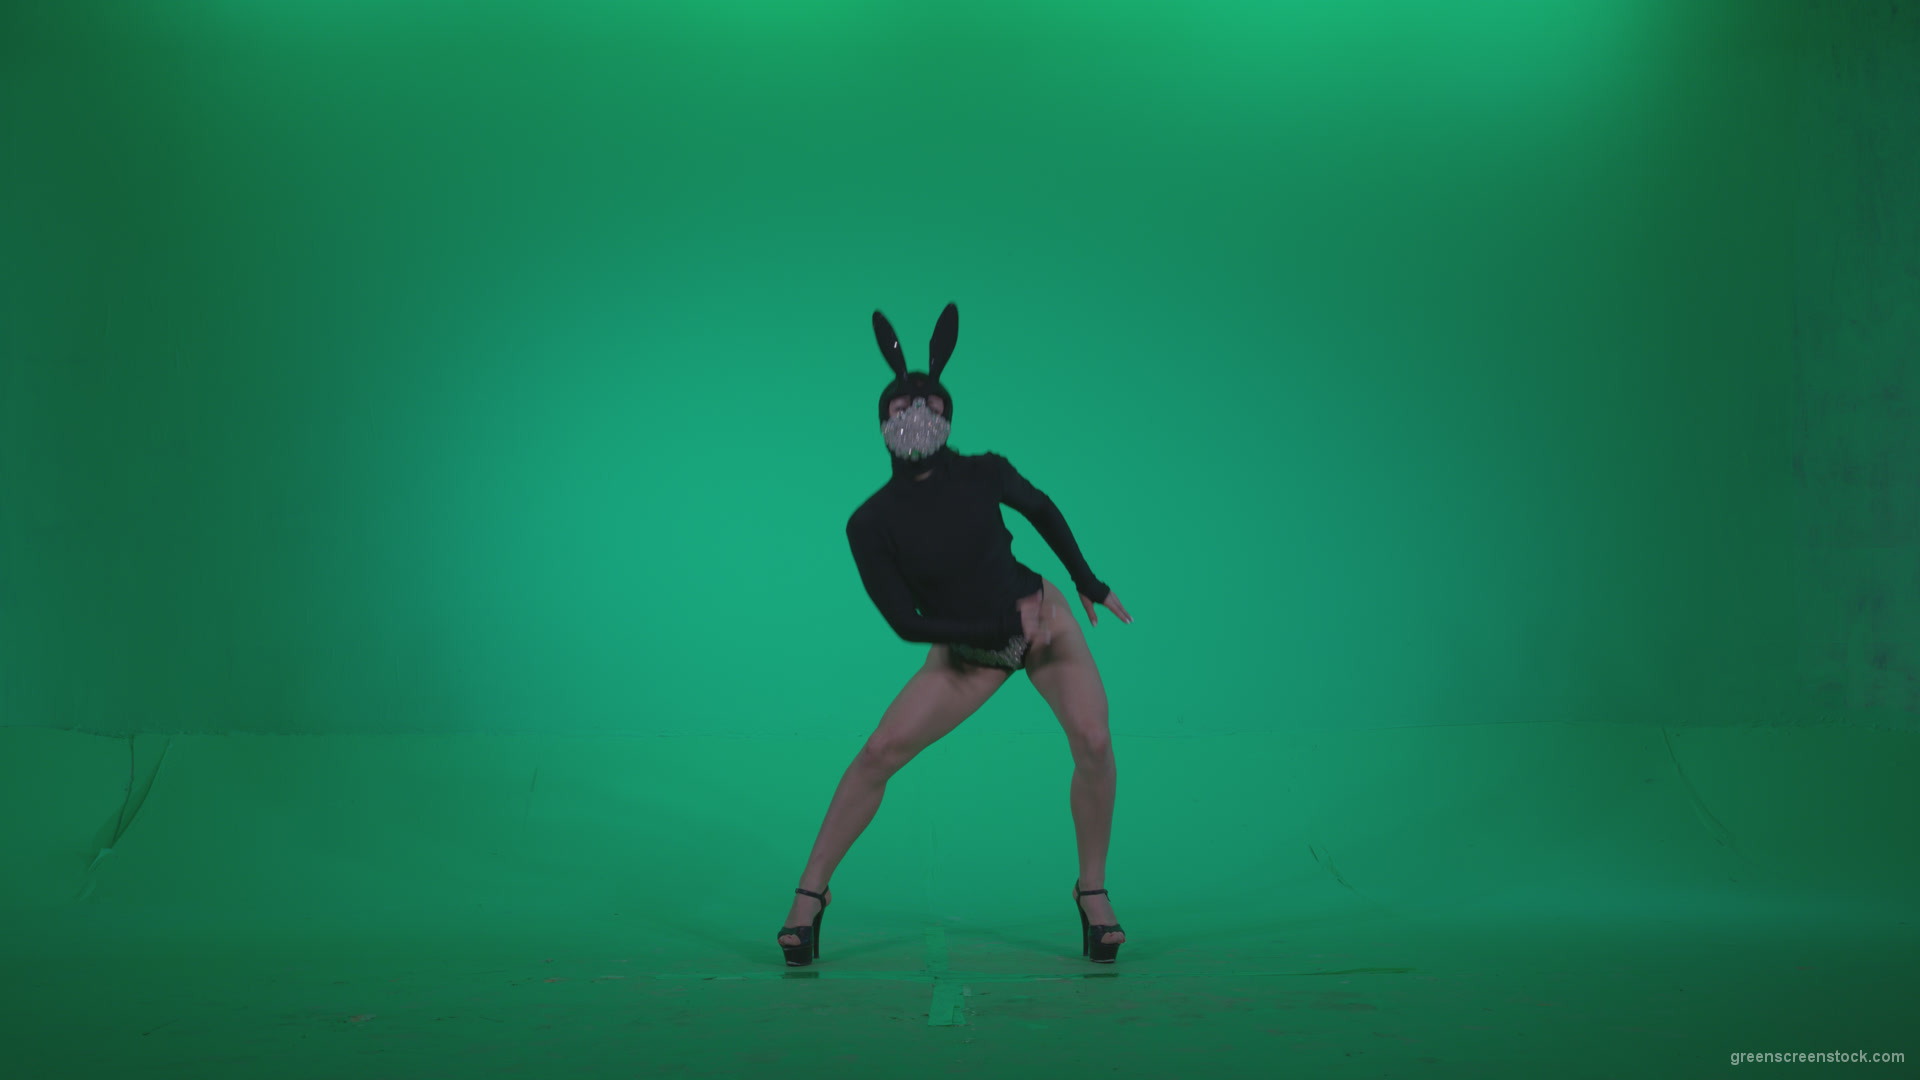 Go-go-Dancer-Black-Rabbit-u8-Green-Screen-Video-Footage_006 Green Screen Stock